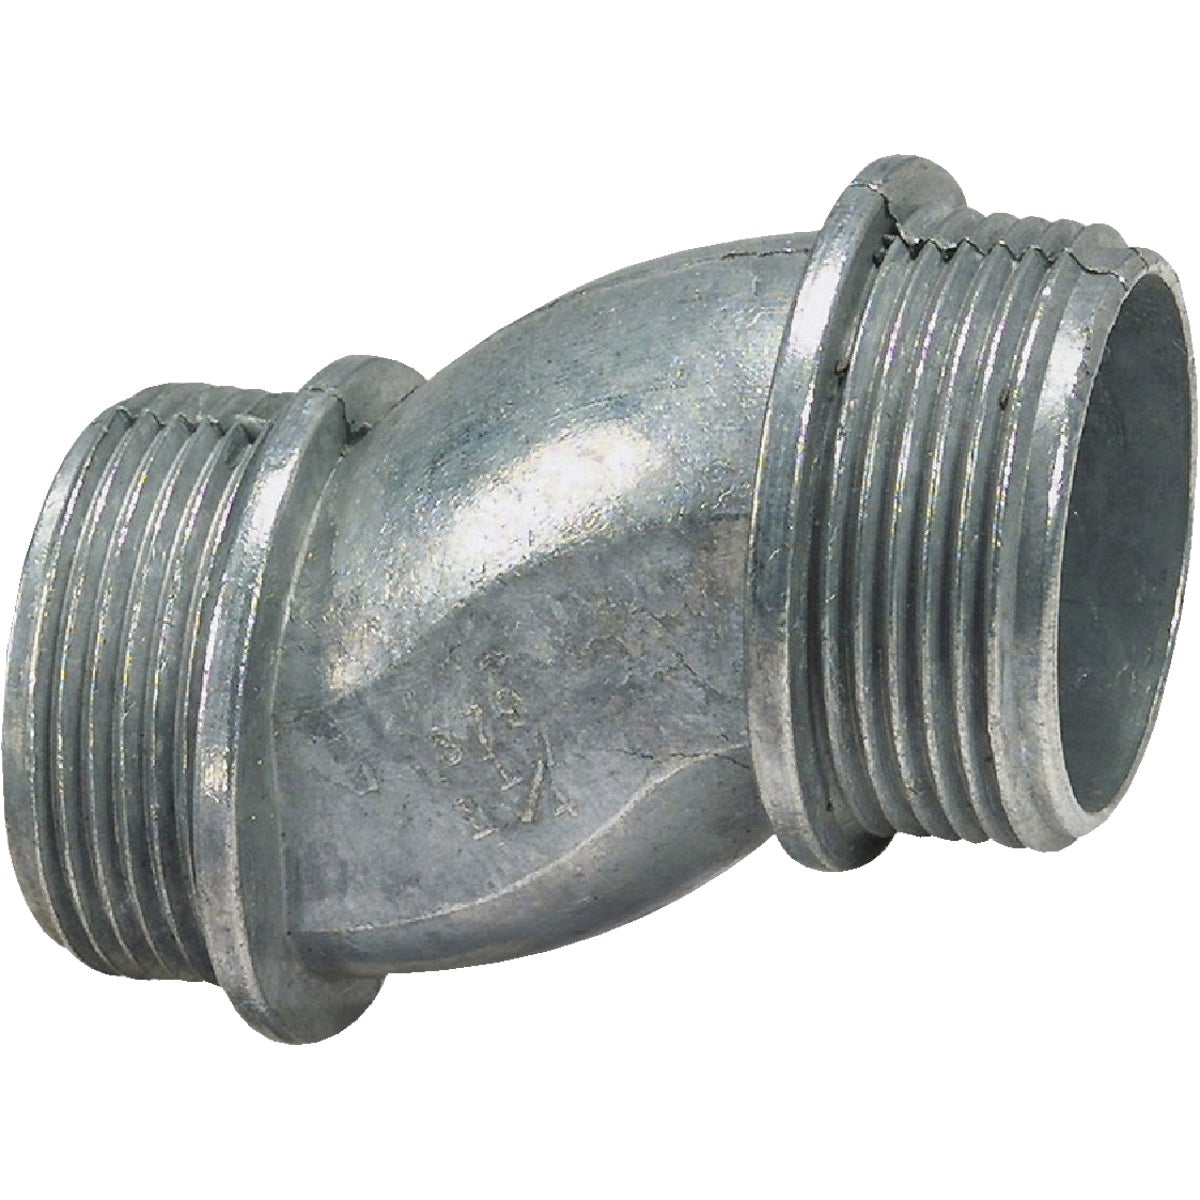 Item 502294, Rigid offset nipple featuring durable die-cast zinc pressure cast 